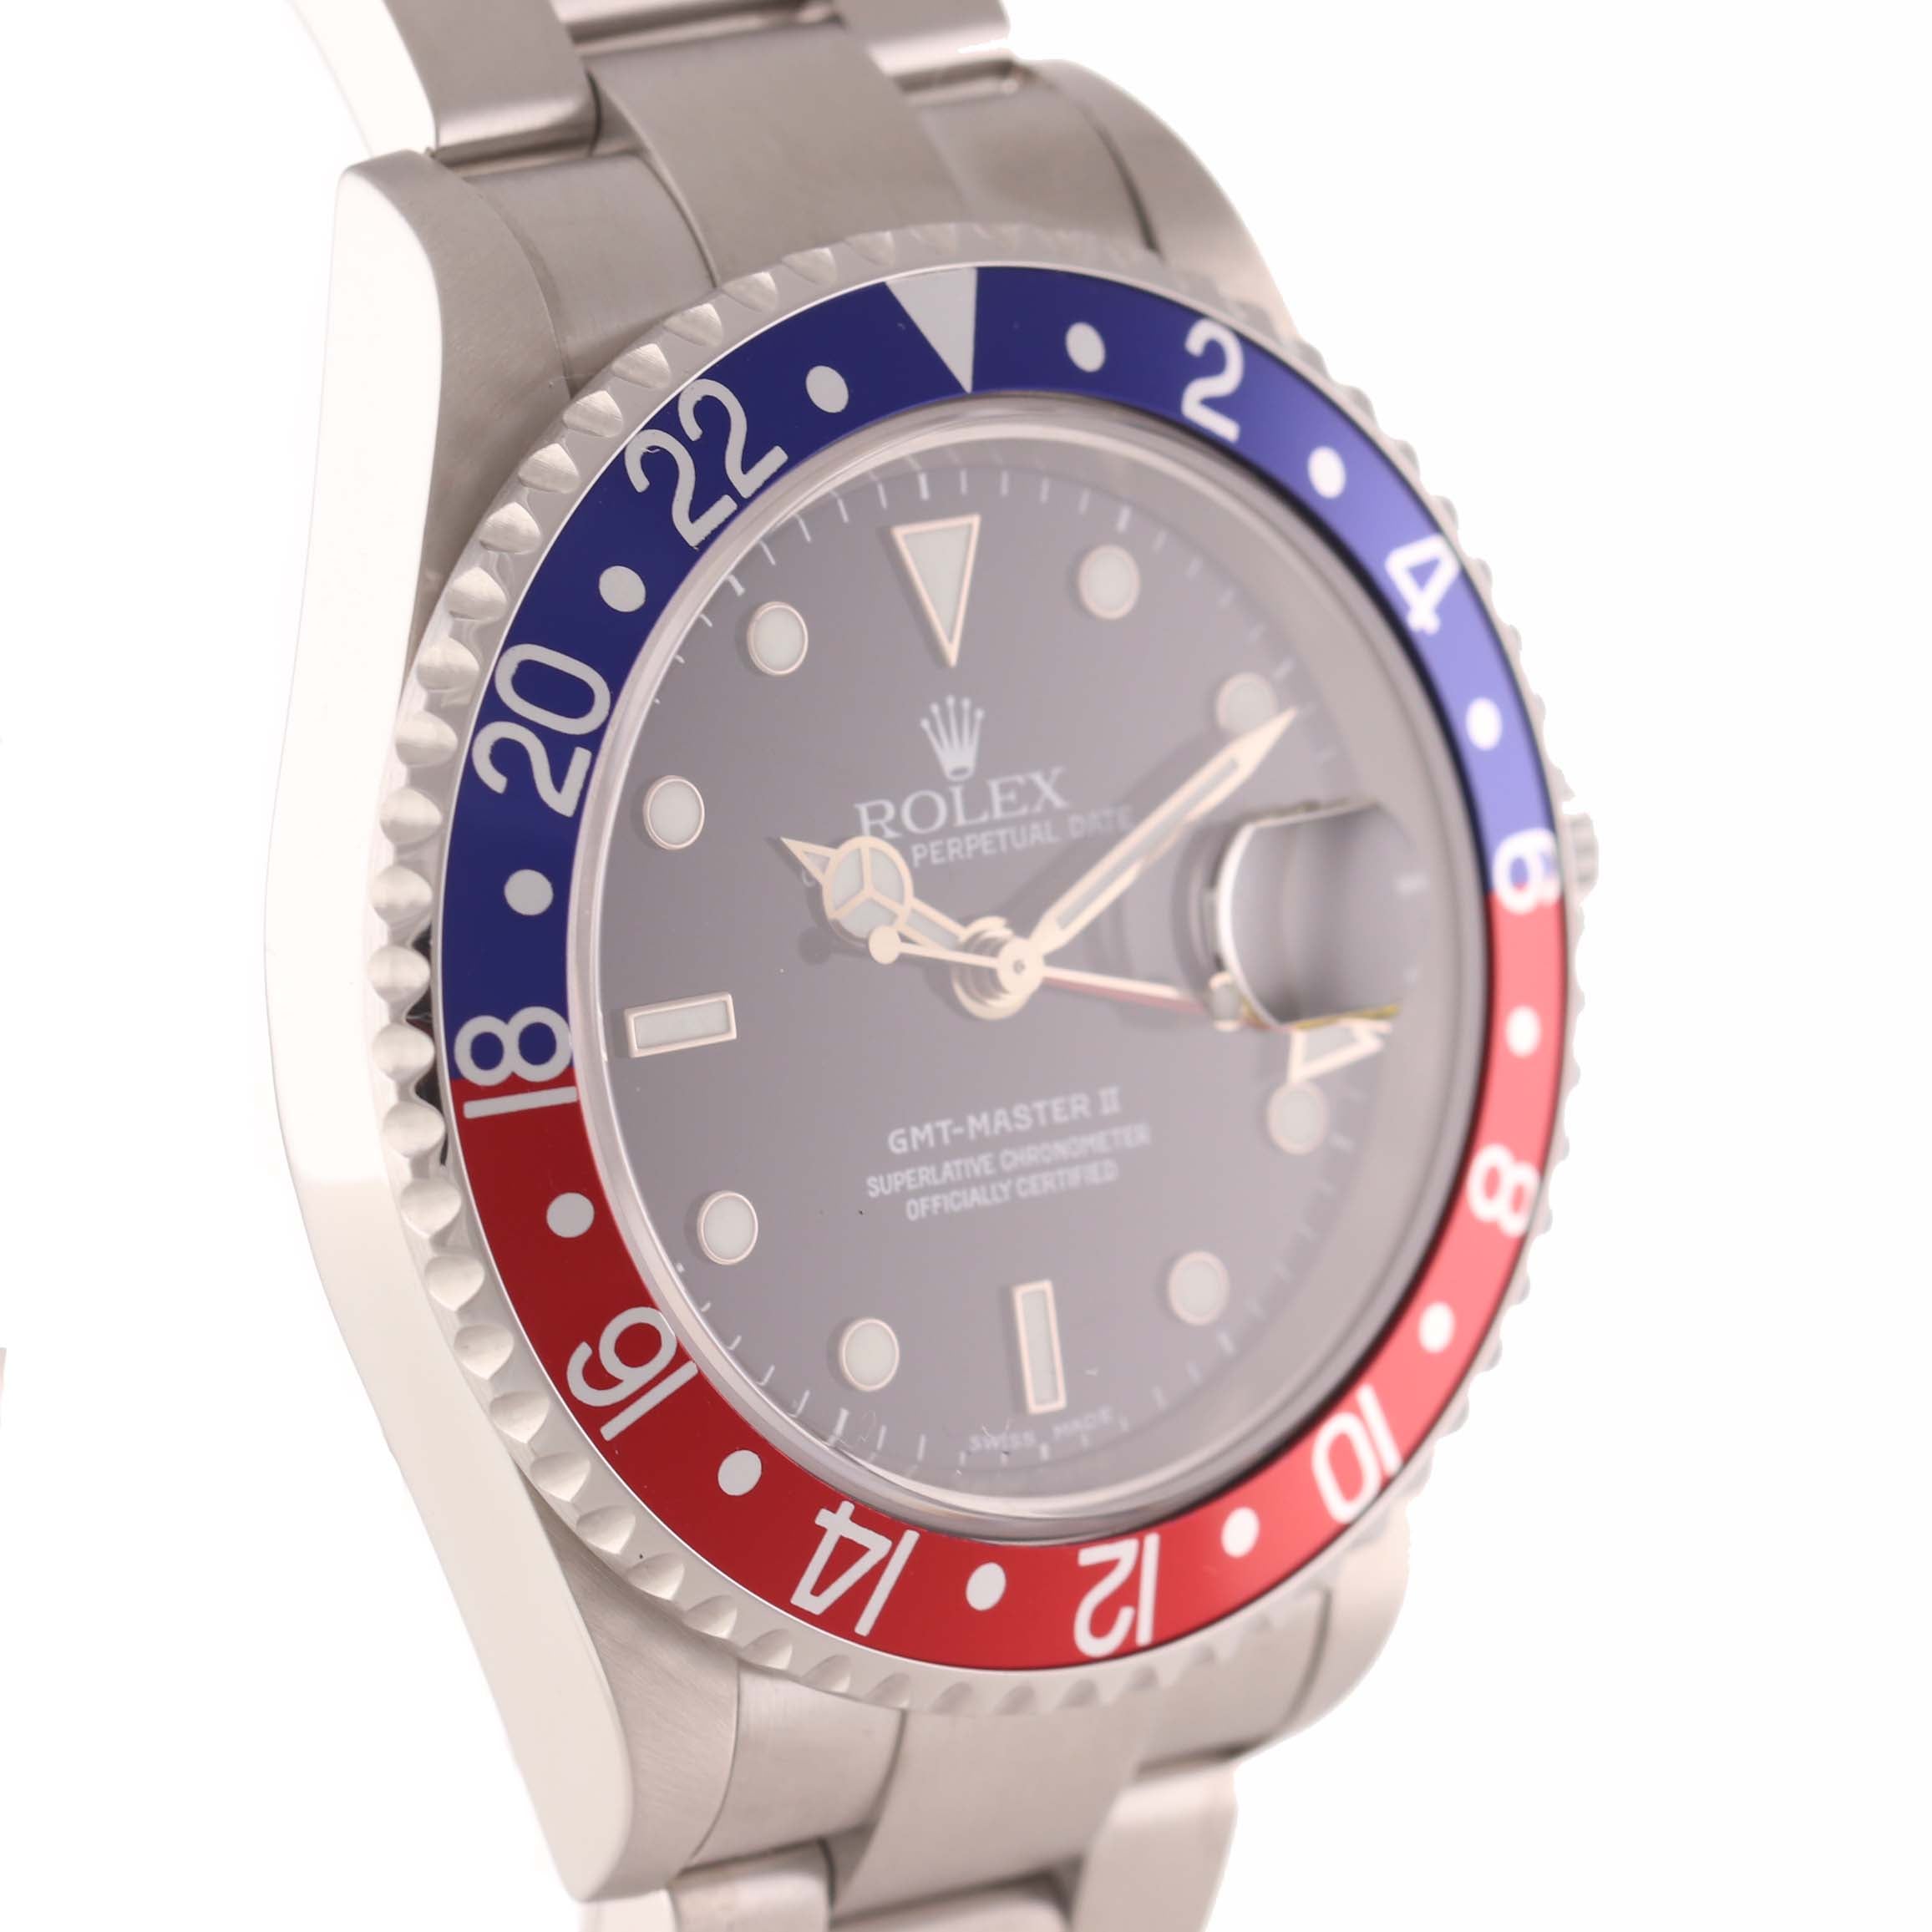 2007 Rolex GMT-Master 2 Pepsi Steel 16710 40mm Watch No Holes Black Dial Watch